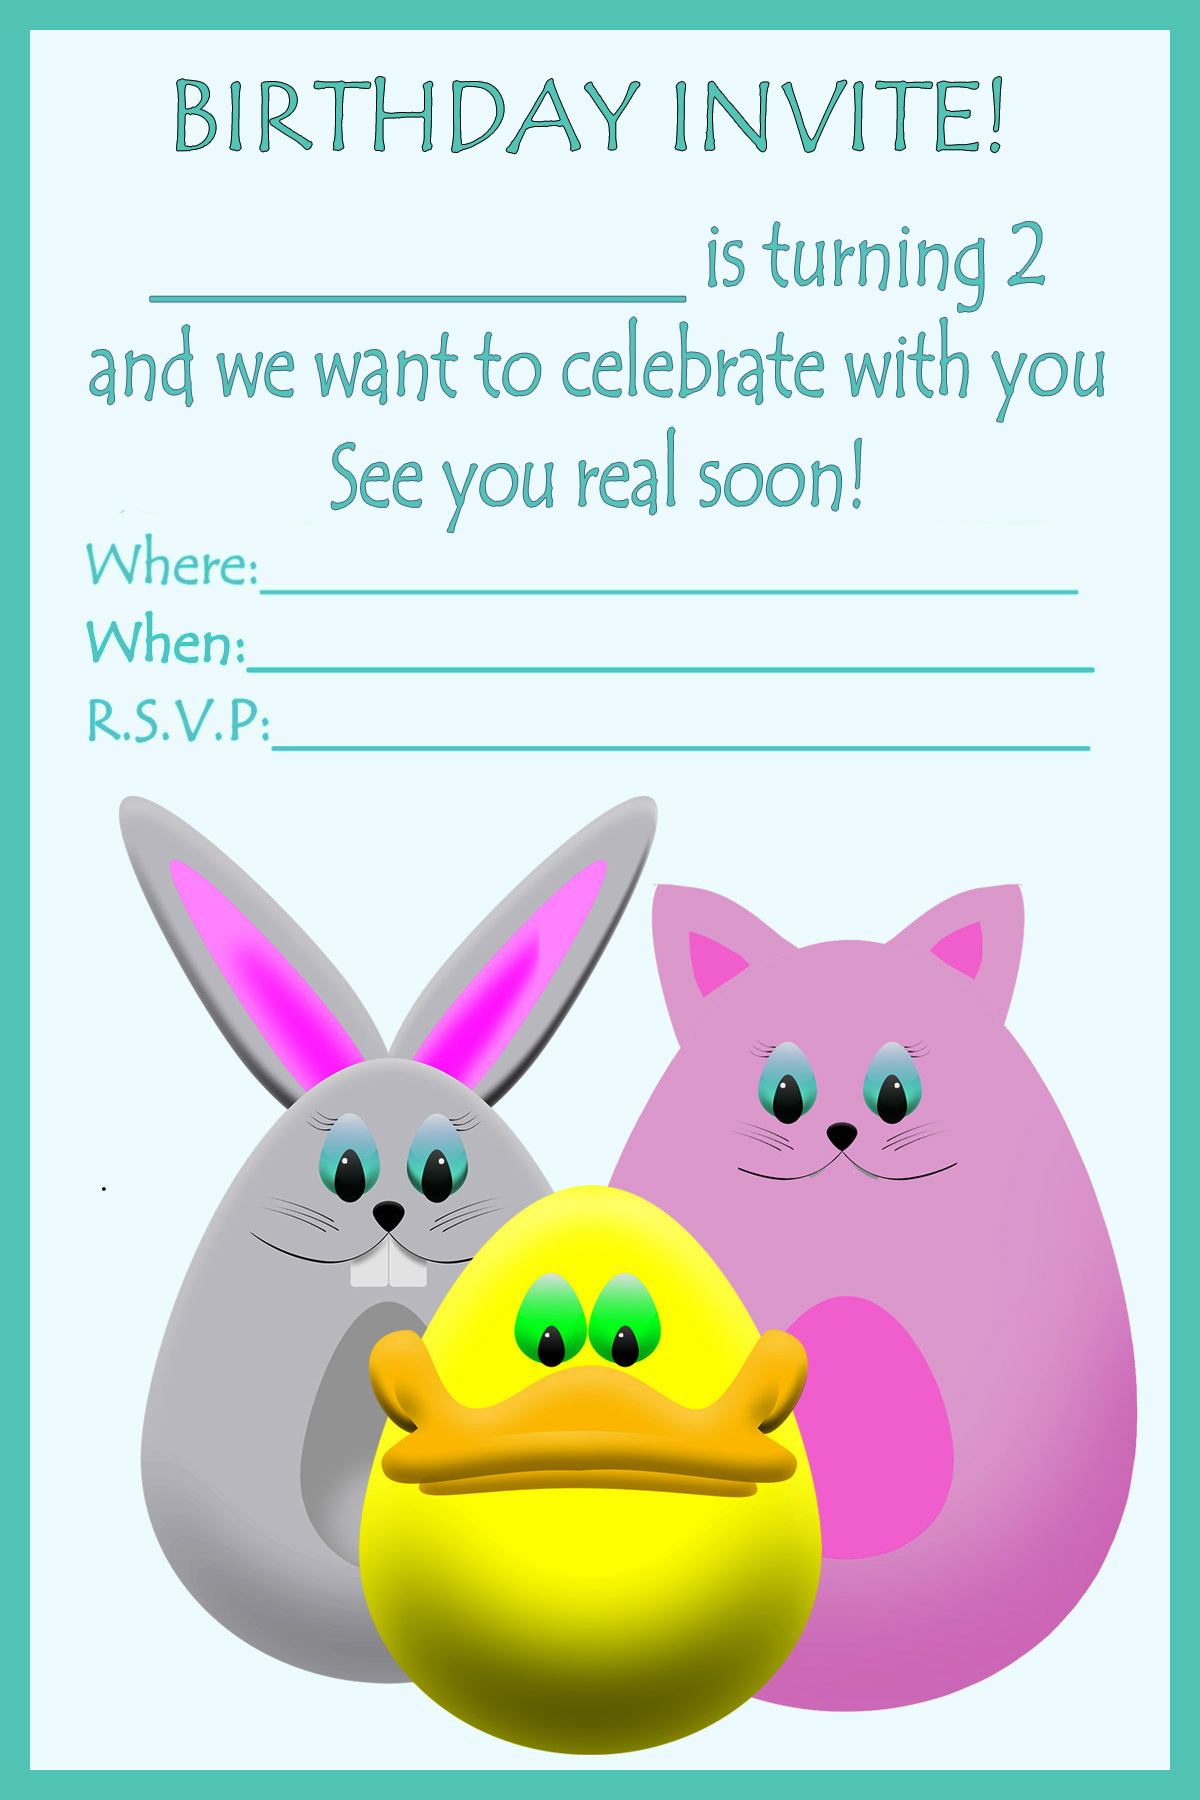 2nd birthday invite